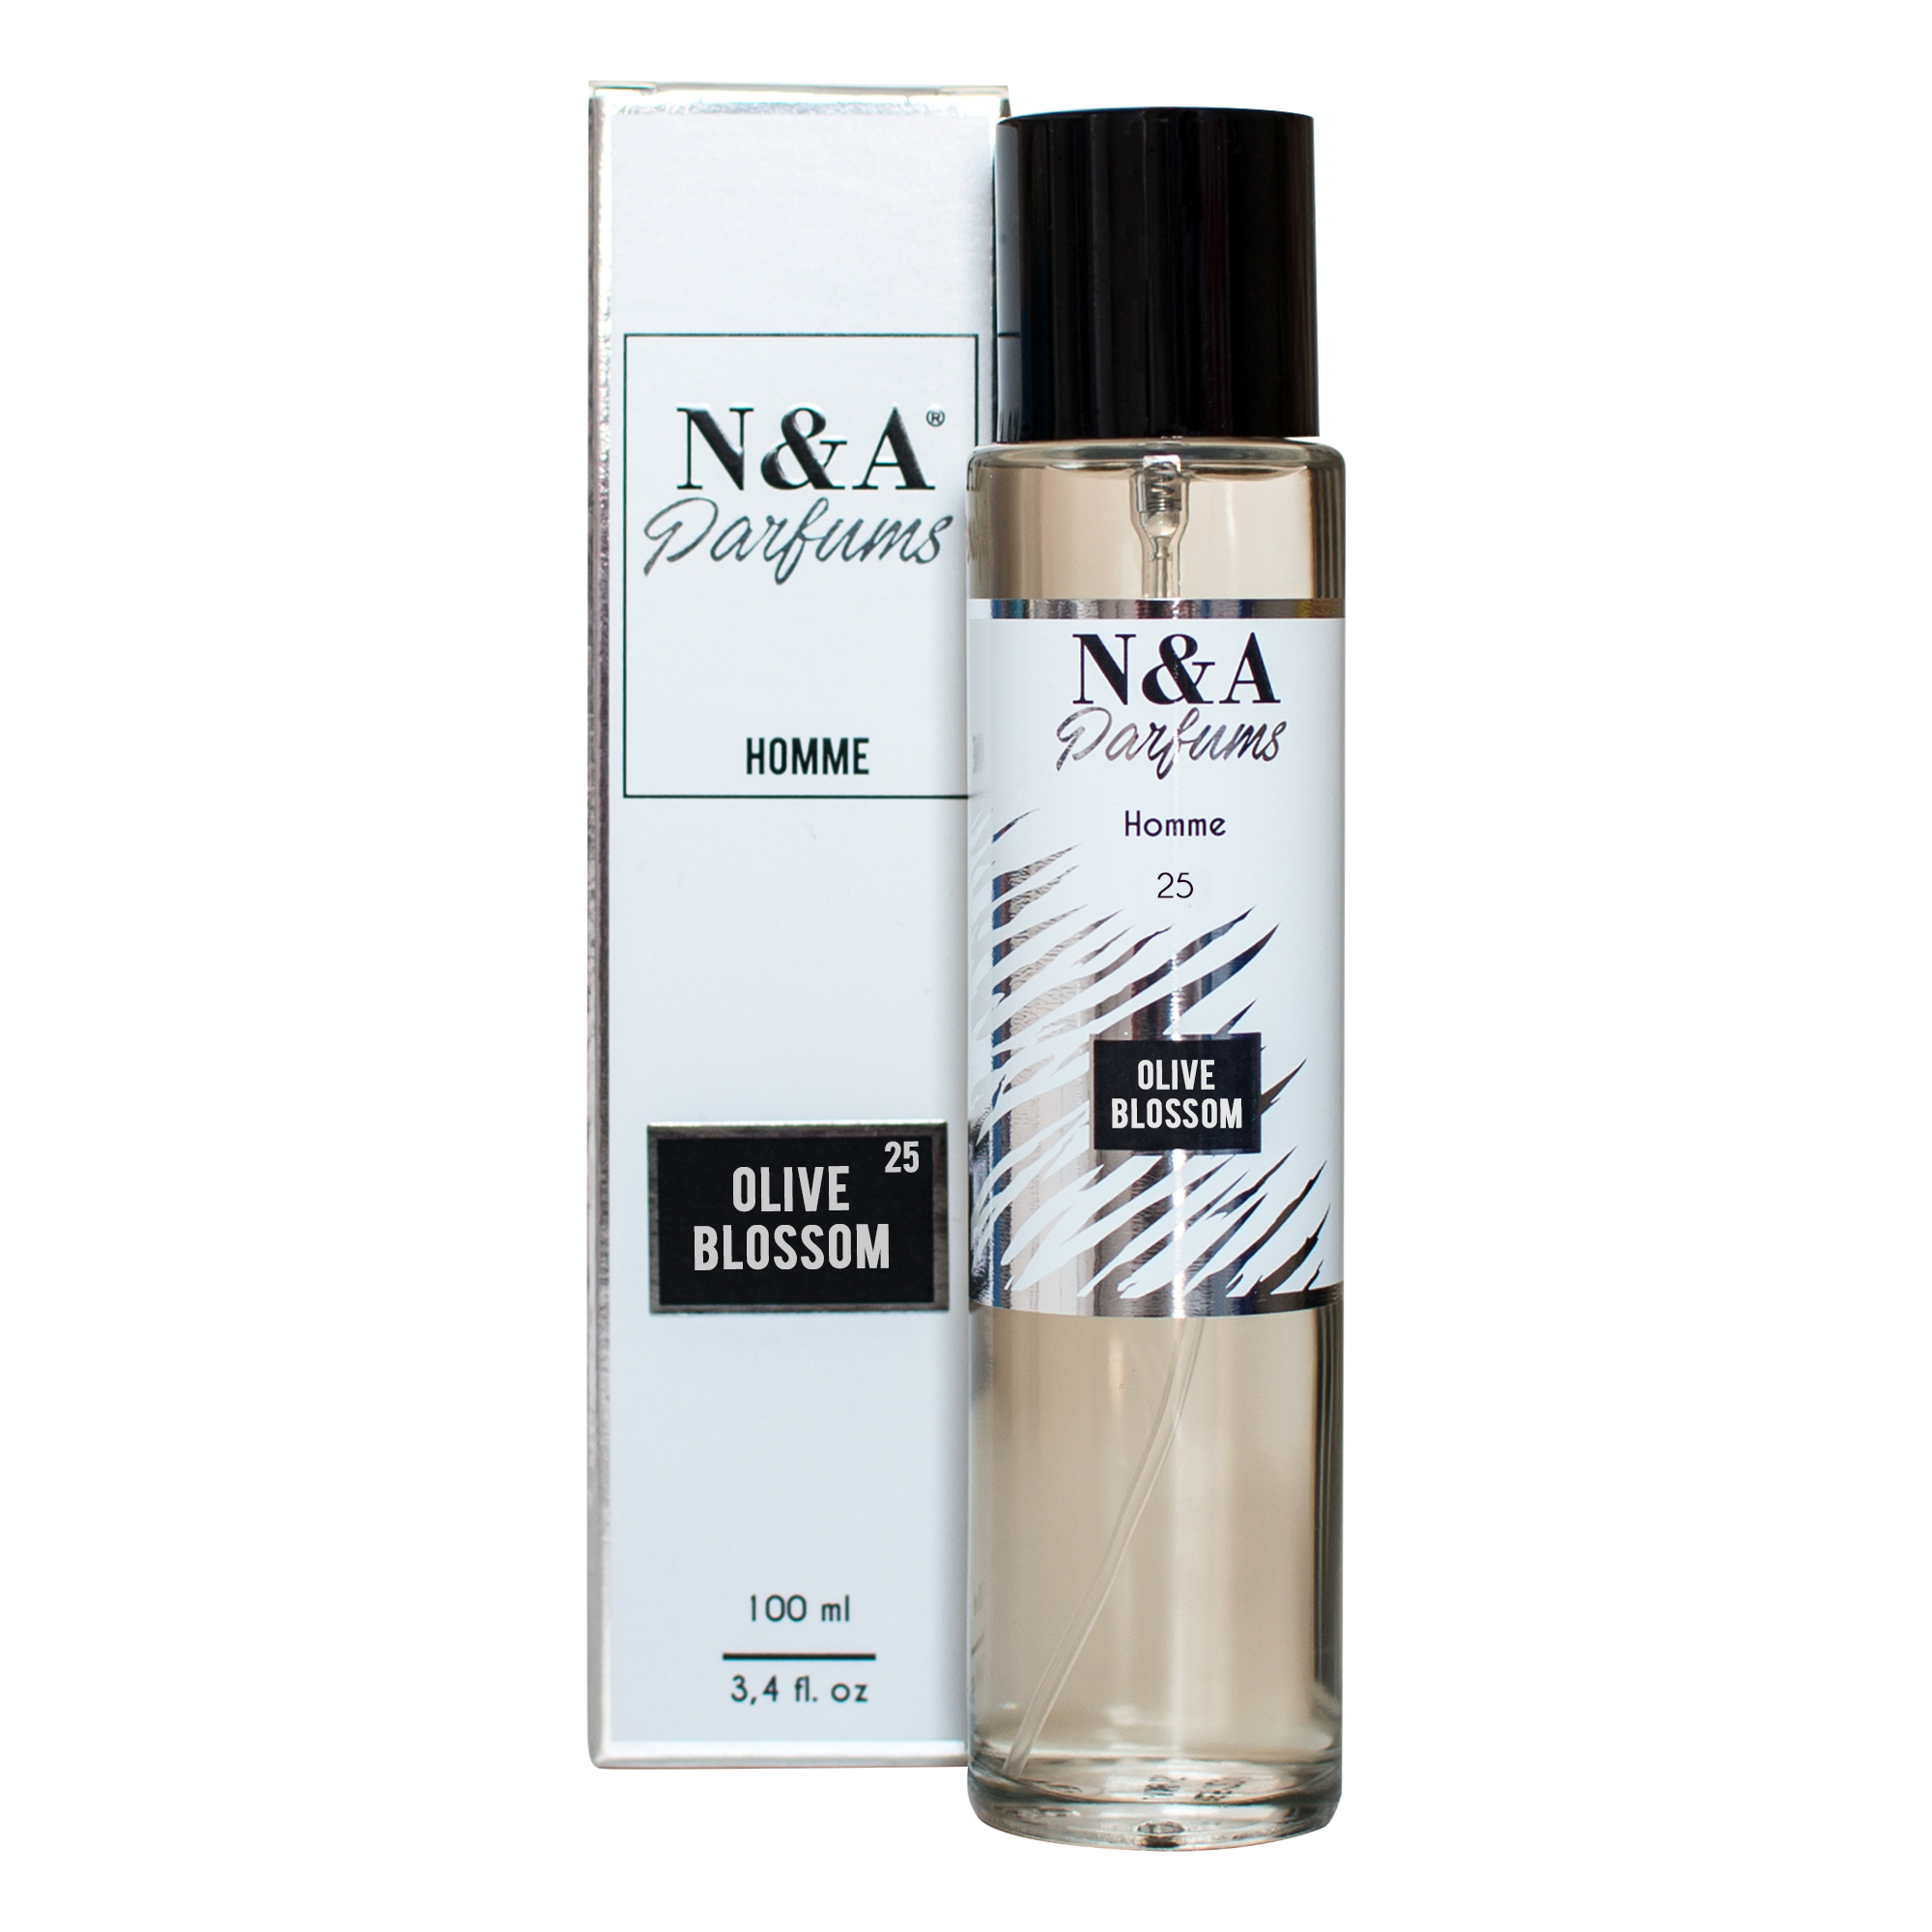 Perfume N&A 25 100ml - Se Gosta de GIORGIO ARMANI / ARMANI CODE experimente a Nossa Fragrância